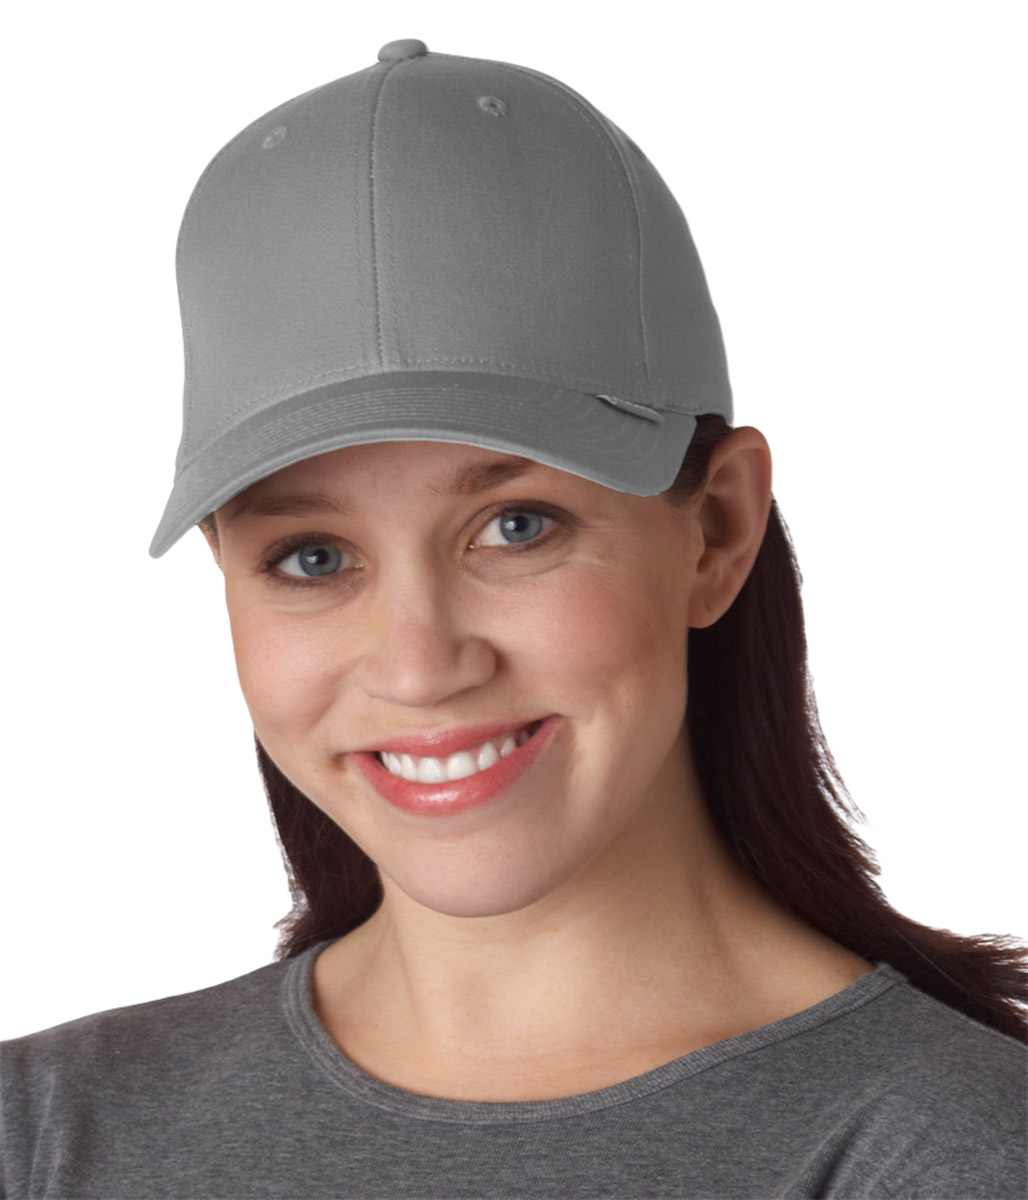 Flexfit Brushed Twill Fitted Baseball Blank Hat Cap plain flex fit 